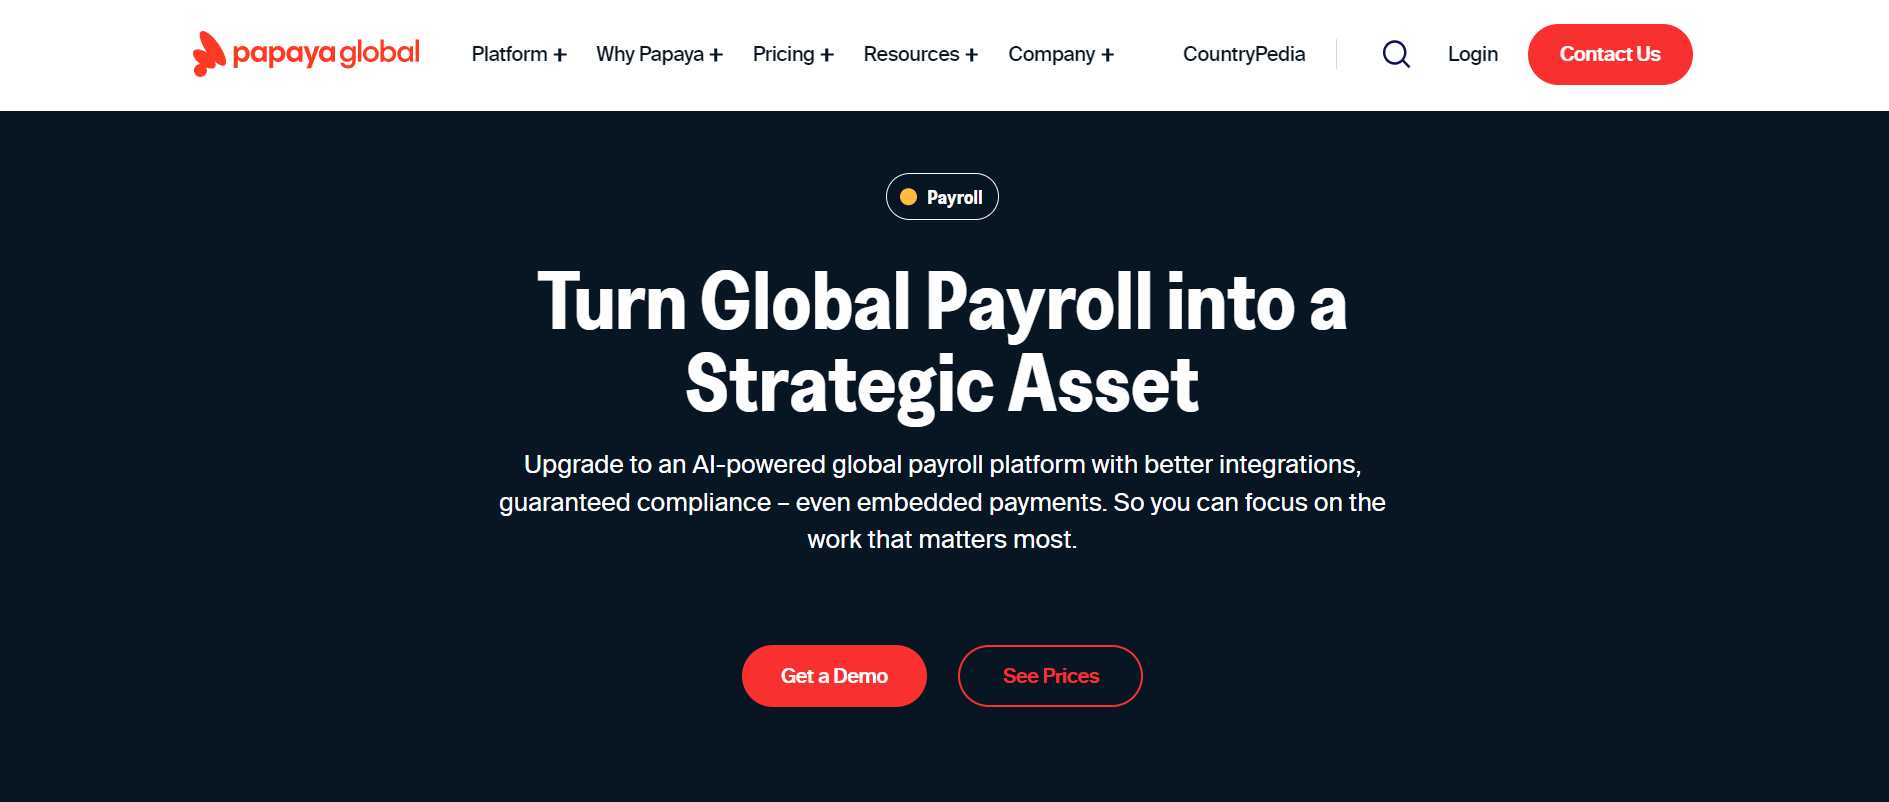 Papaya Global HR Software for Payroll